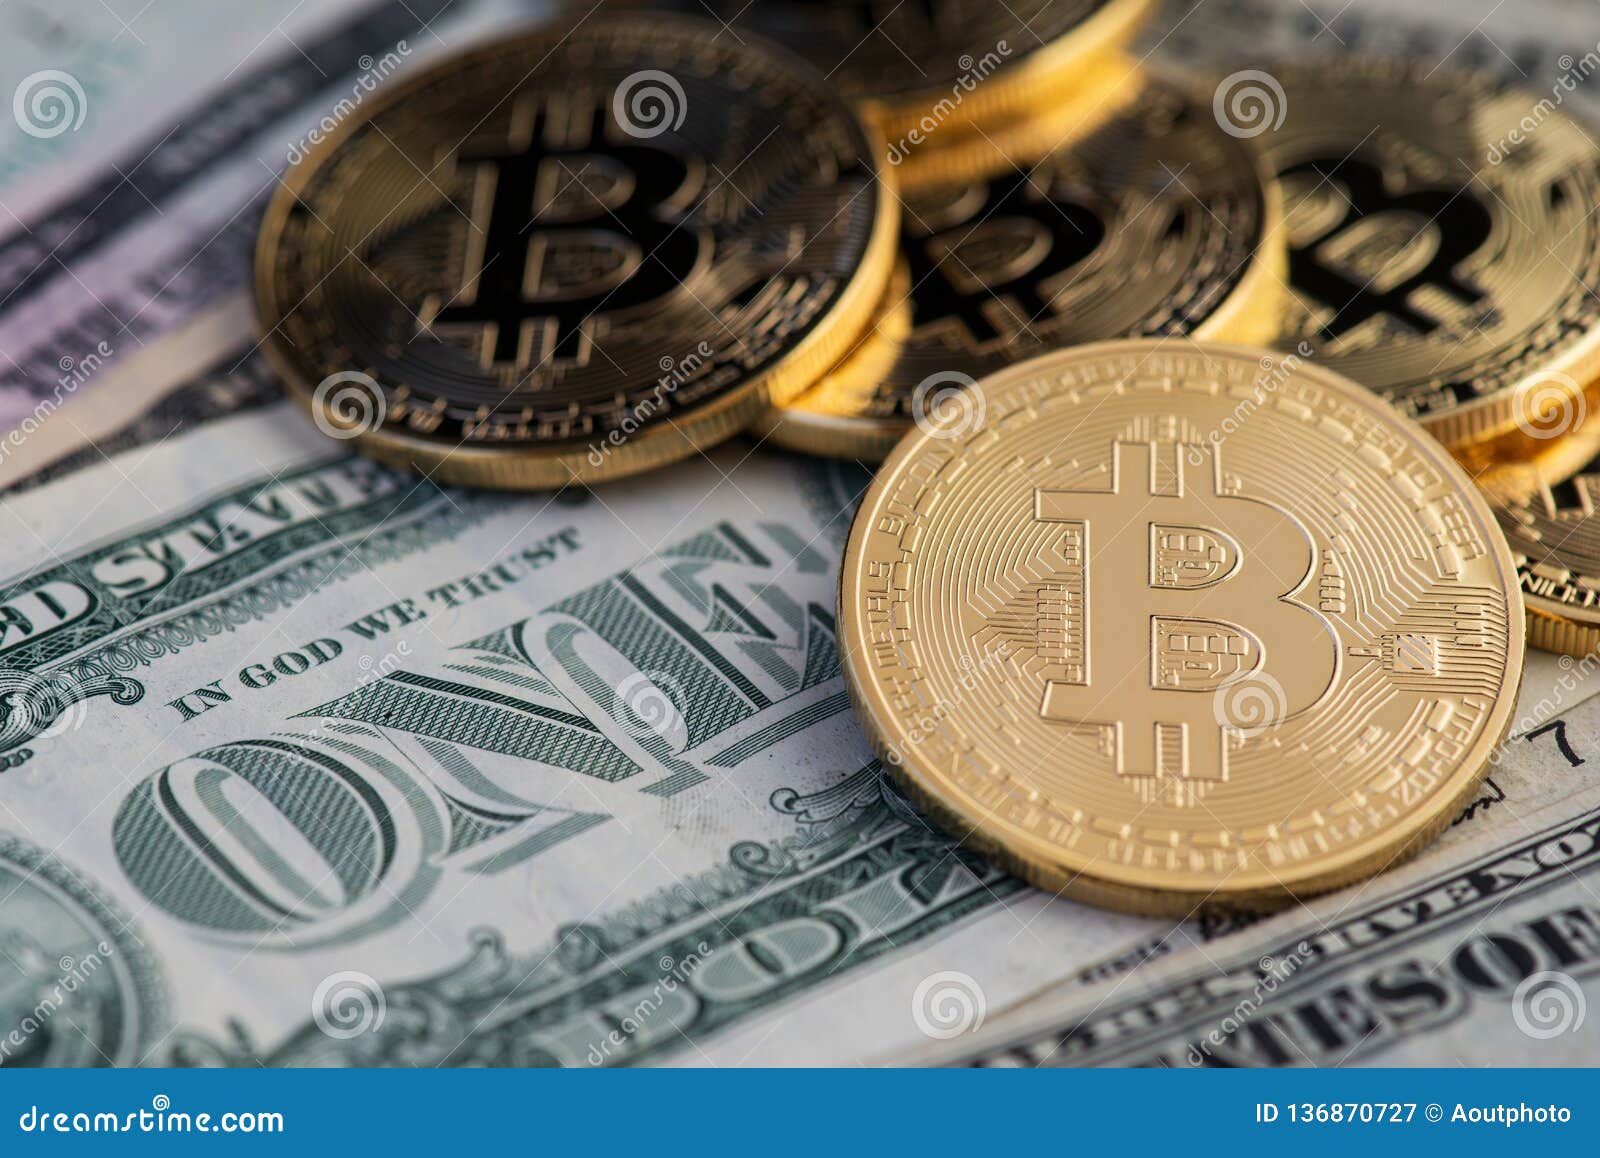 1 bitcoin in us dollars